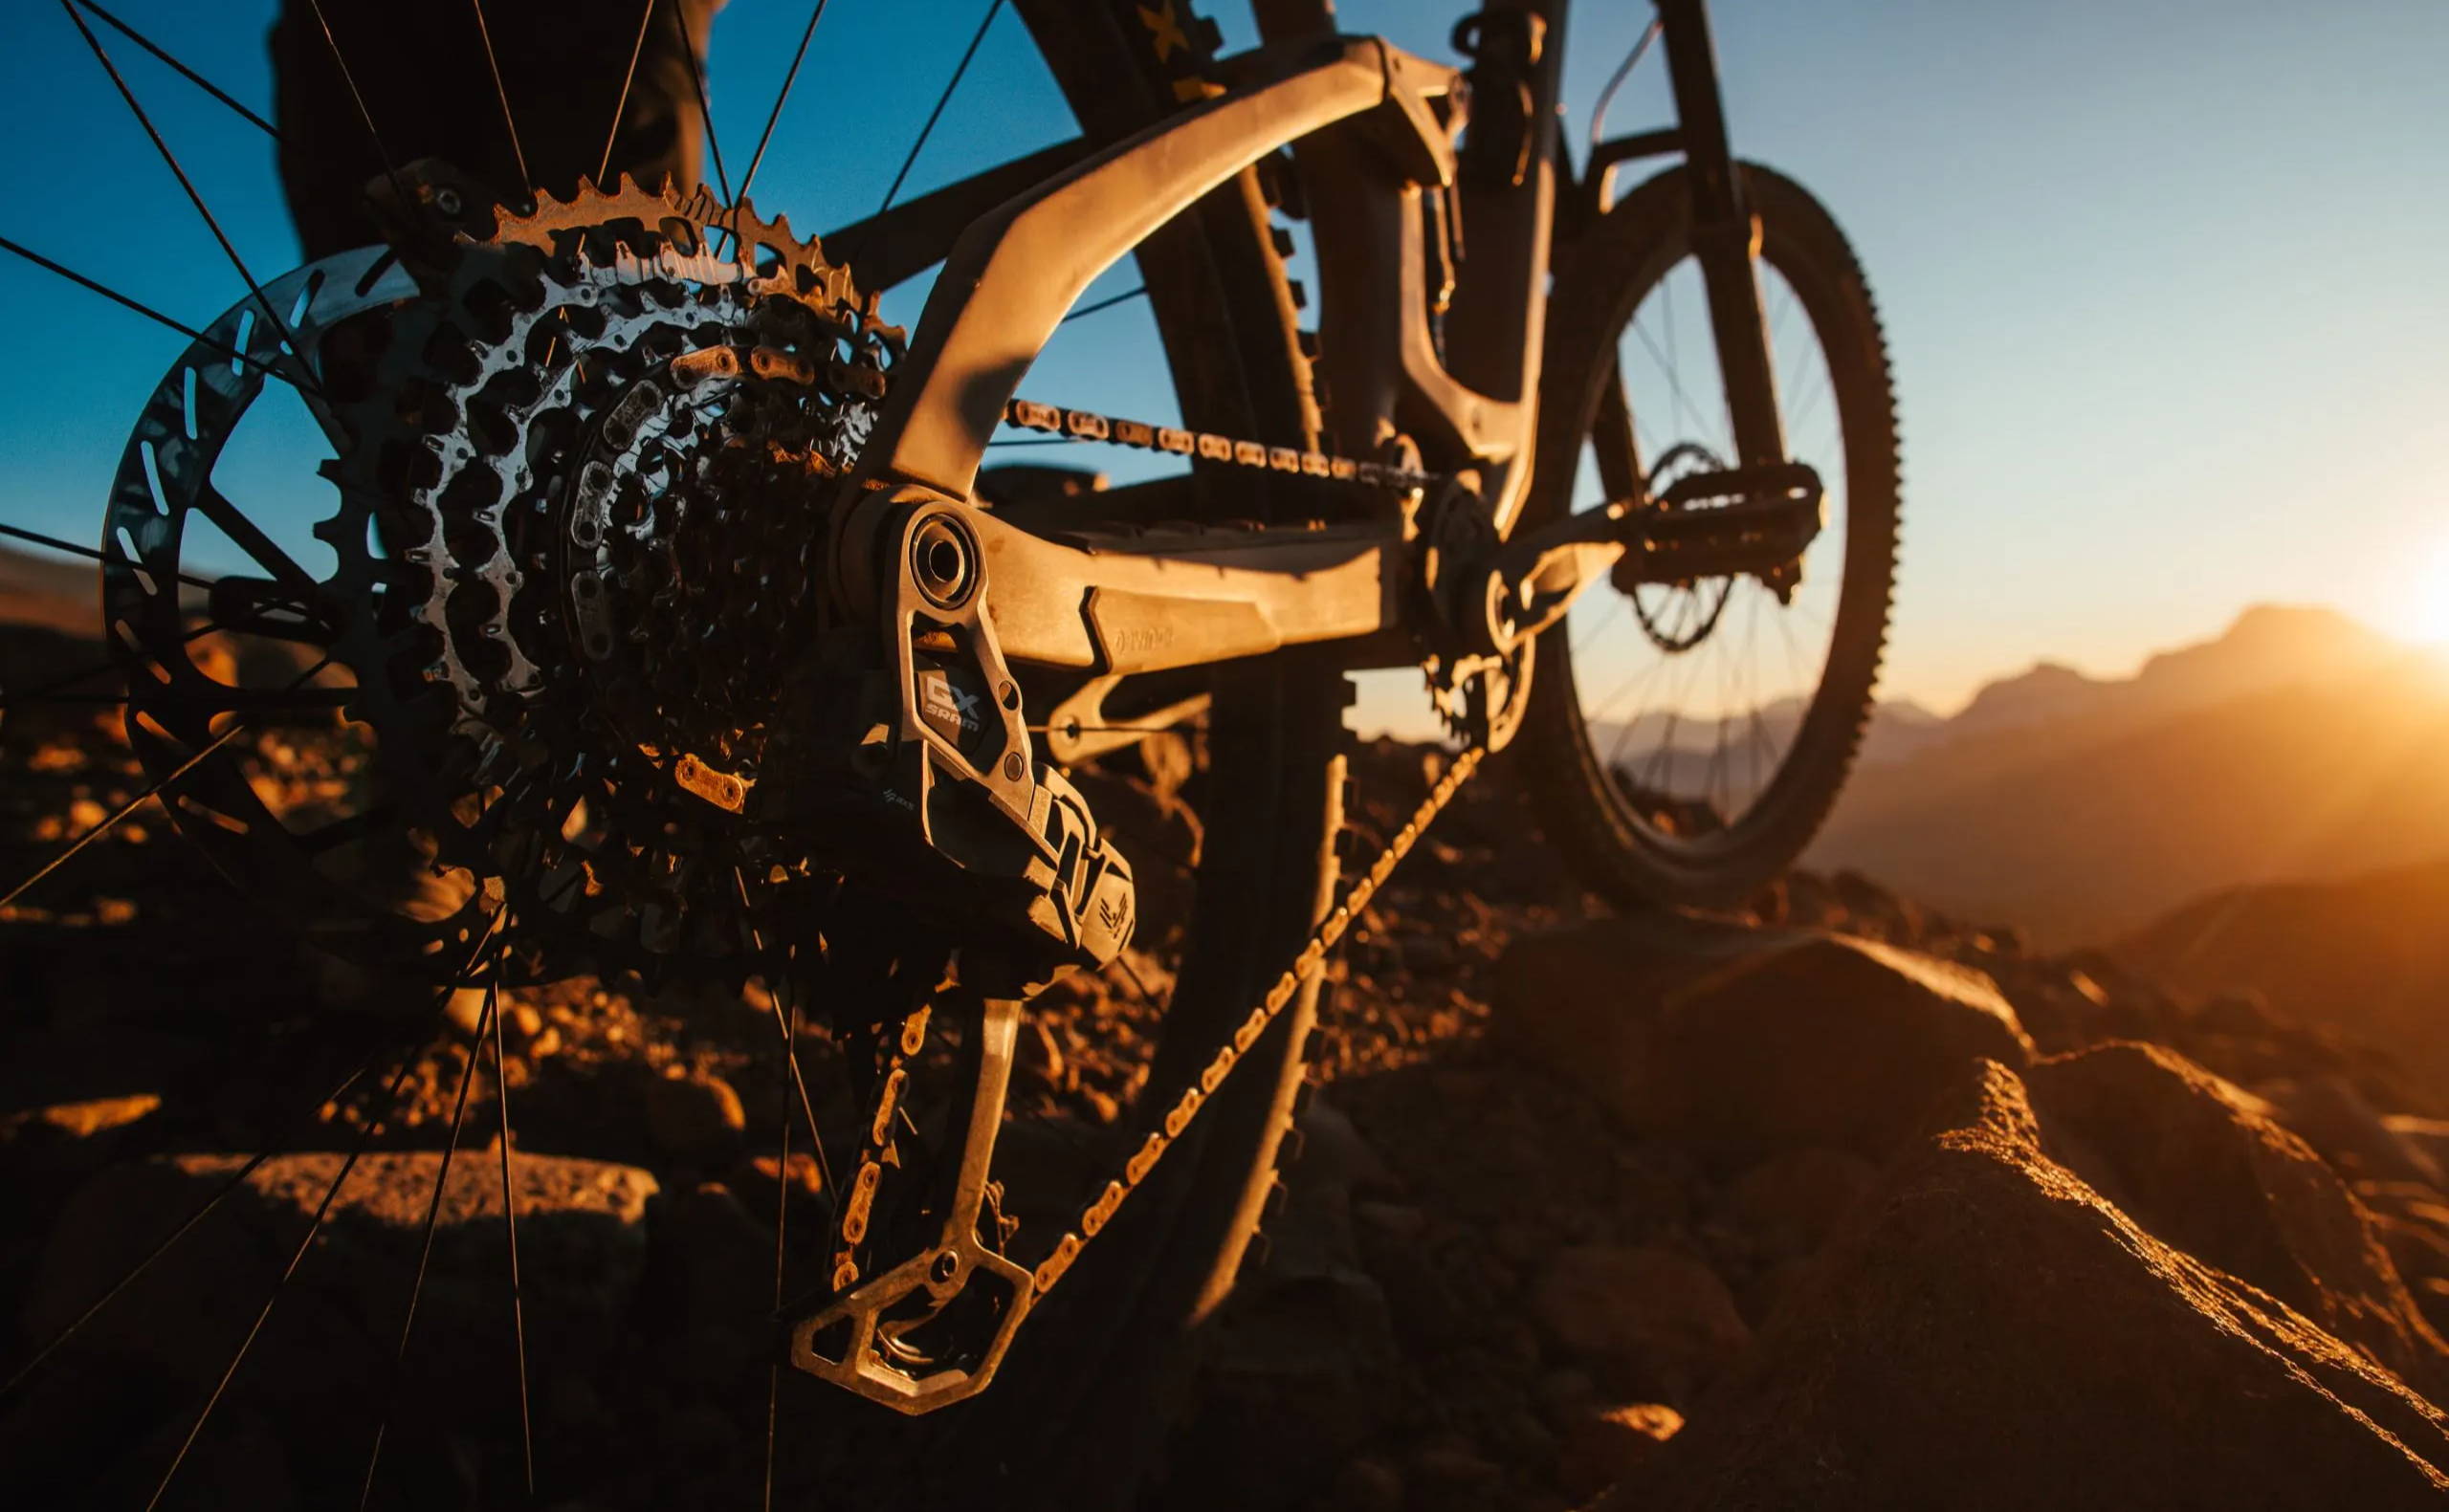 sram gx transmission on a trex fuel mountain bike in golden hour